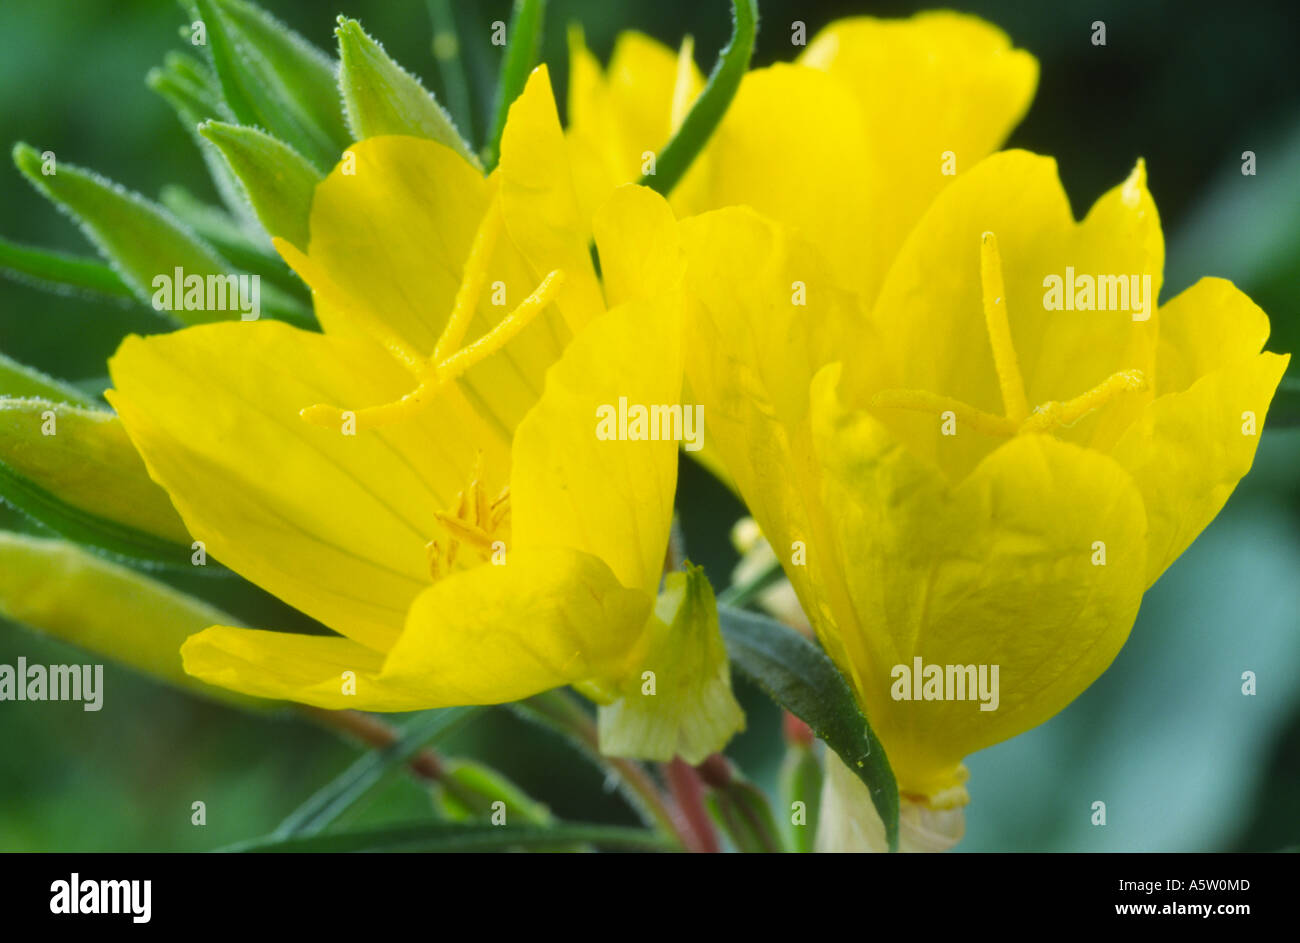 Oenothera 'African Sun'. Evening primrose, Sundrops. Stock Photo